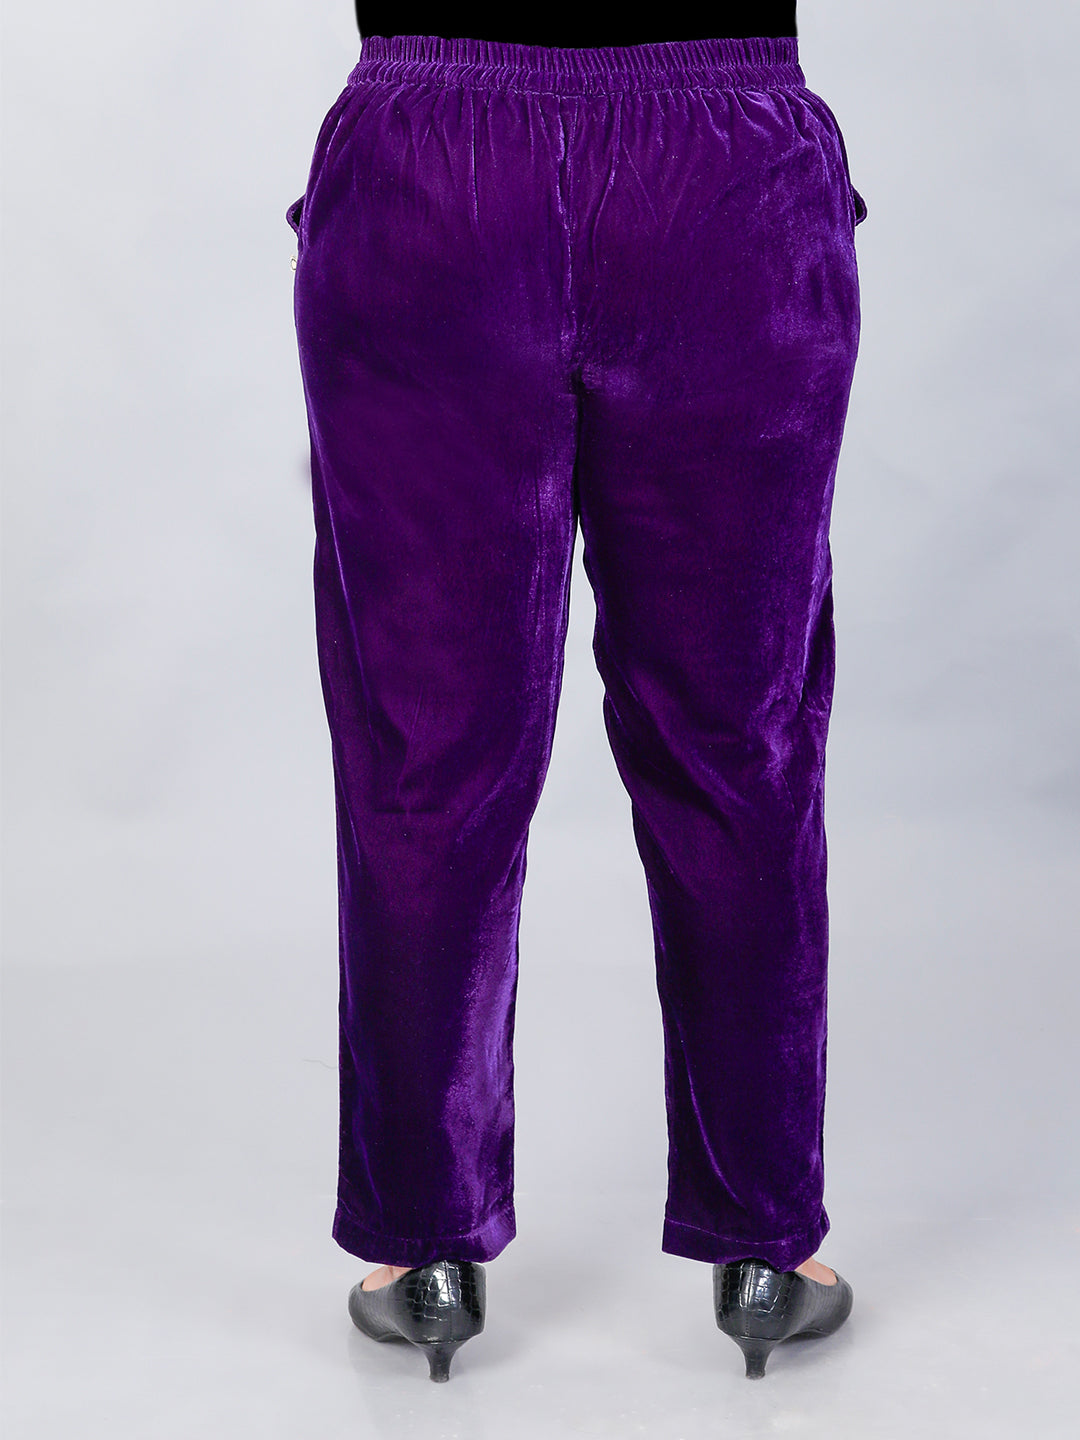 Chalk Girls Purple Track Pants - Selling Fast at Pantaloons.com